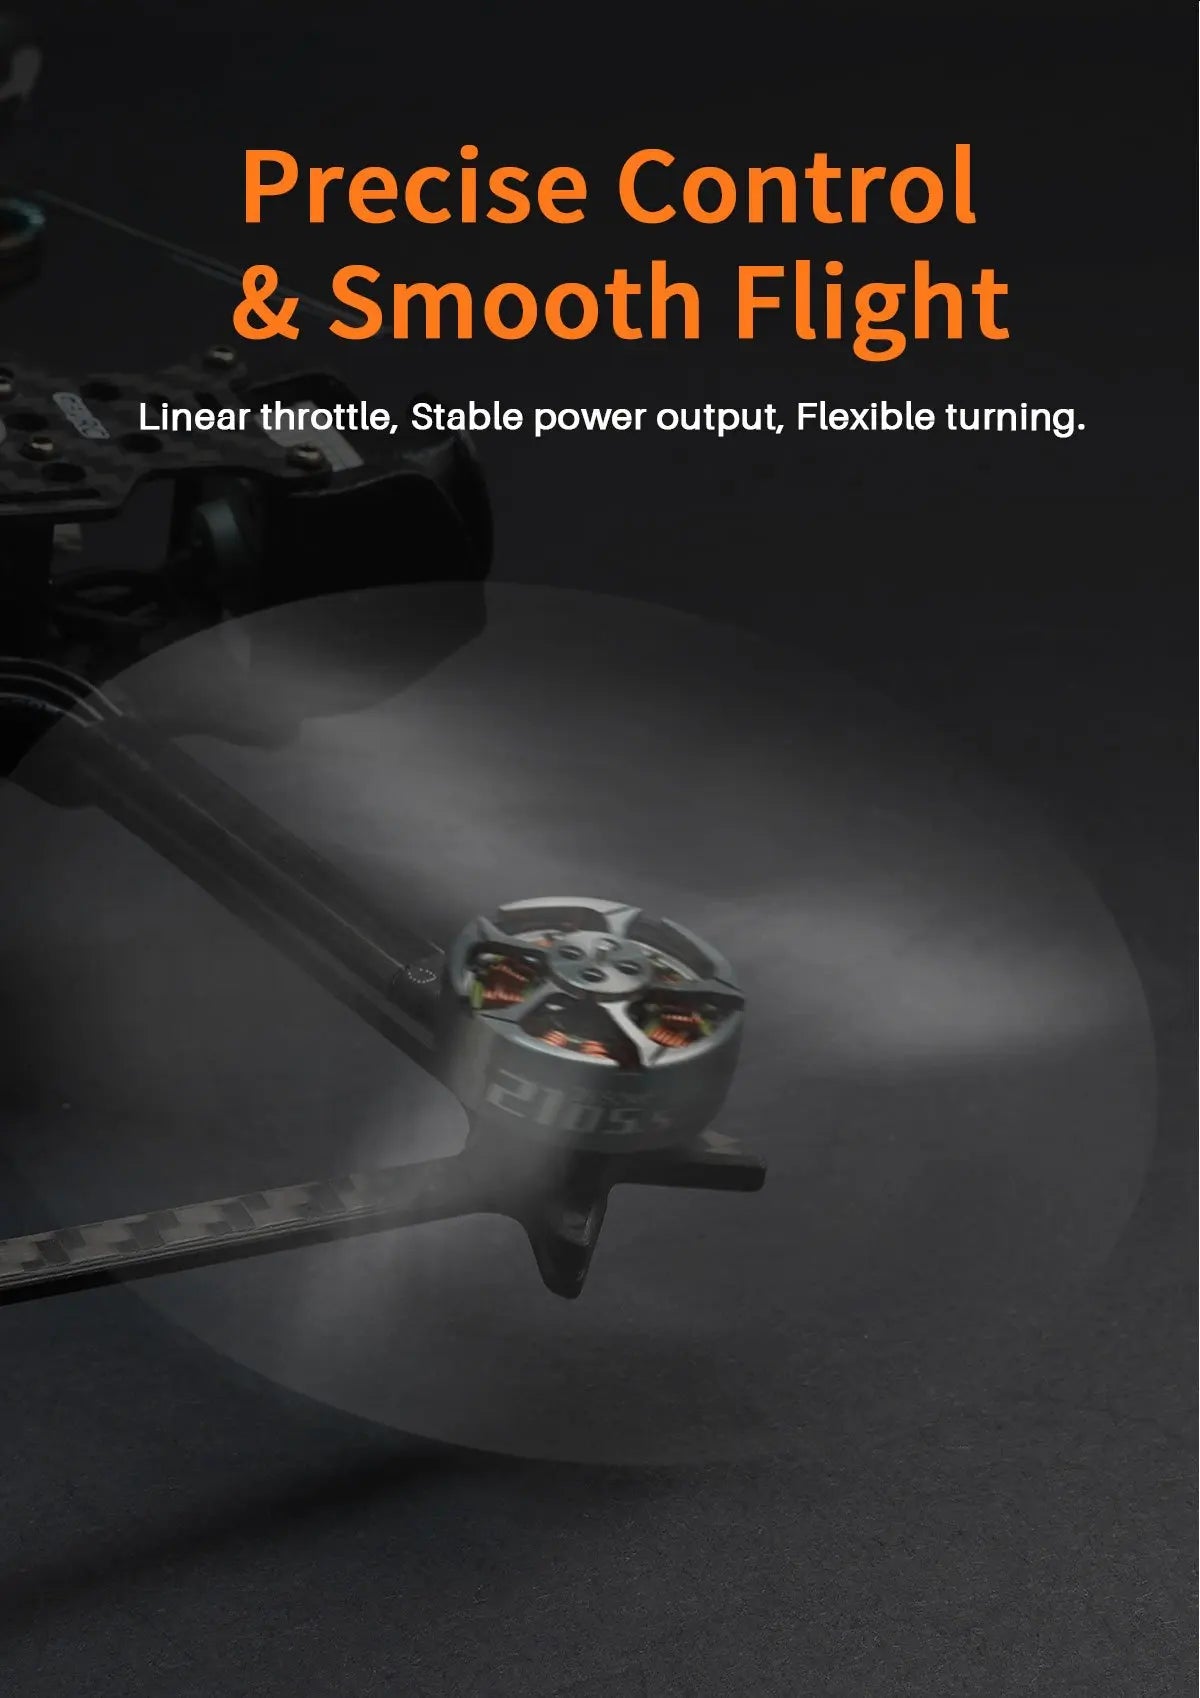 GEPRC SPEEDX2 Motor, Precise Control & Smooth Flight Linear throttle, Stable power output, Flexible